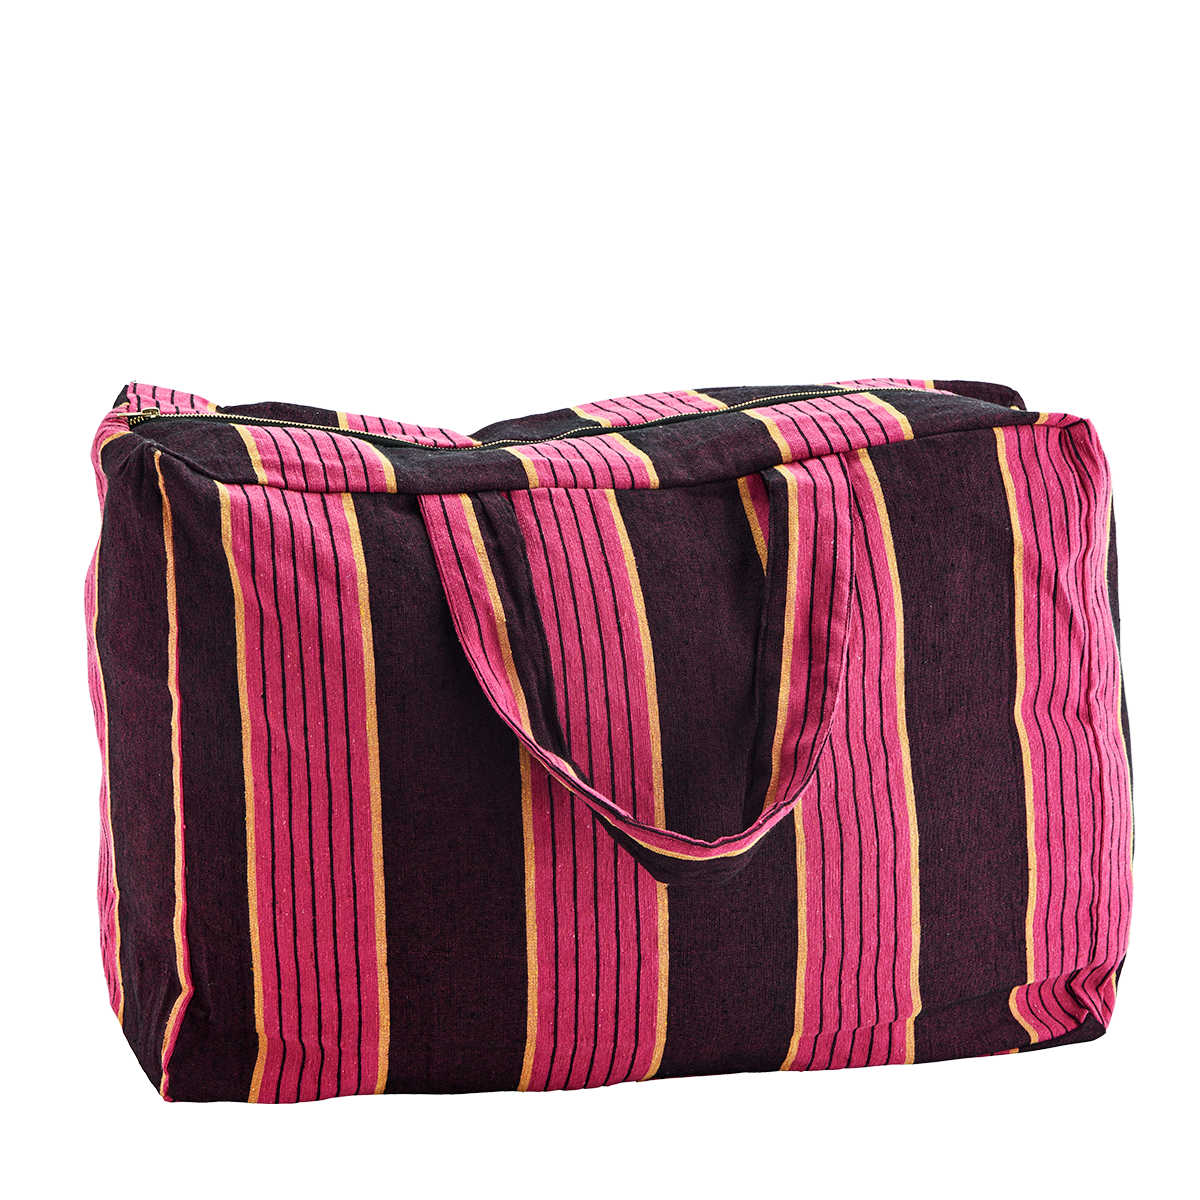 Striped cotton travel bag